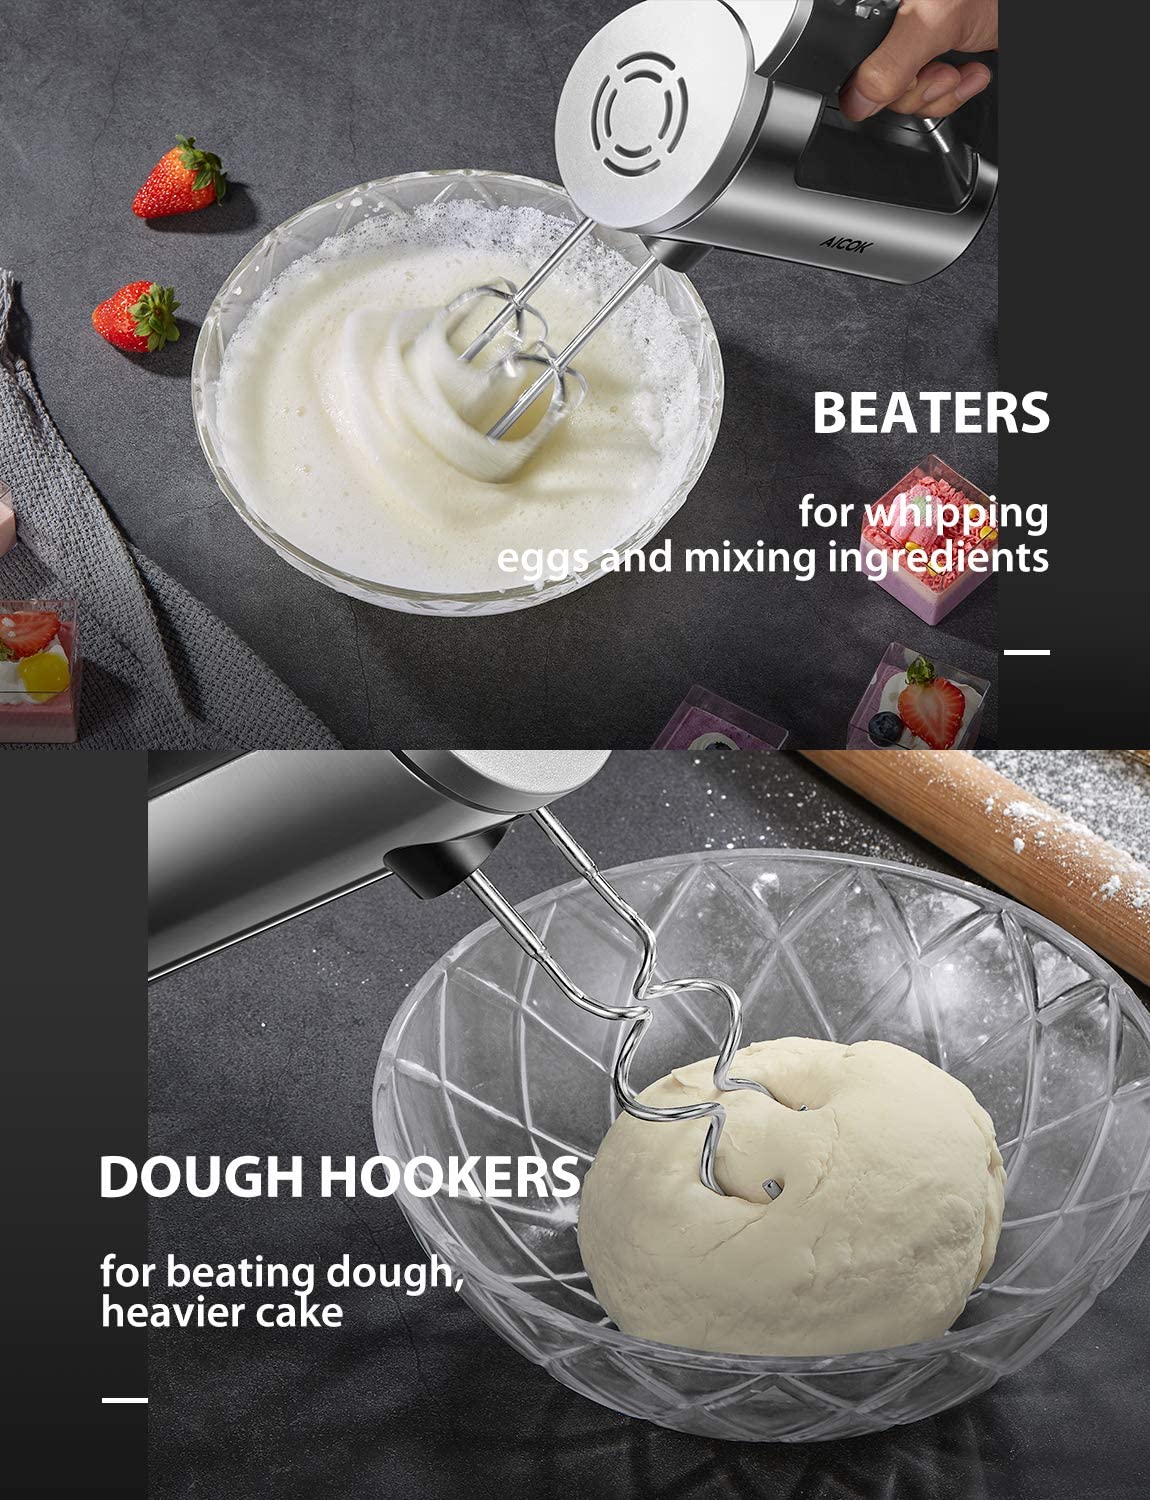 AICOK-Hand Mixer Electric 6-Speed Kitchen Handheld Mixer HM833, hand mixer accessories, mini dough beater, kitchen, baking beginner